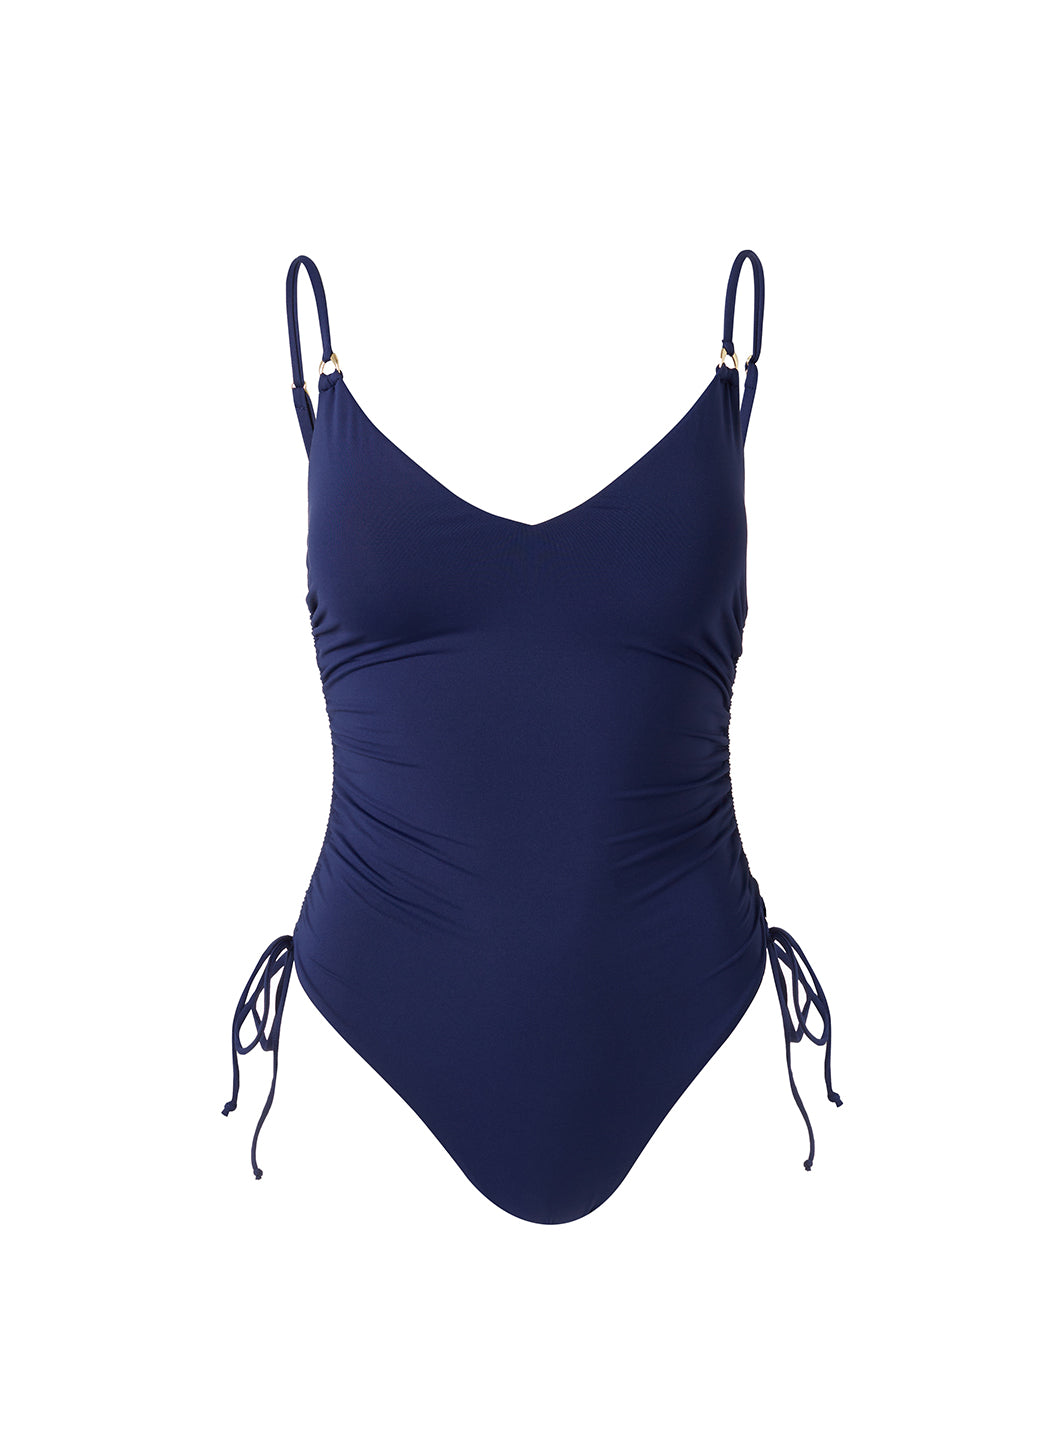 Aayomet Women's One Shoulder Solid Color Split Bathing Suit Swim Bras for  under Swimsuits,Light Blue Medium